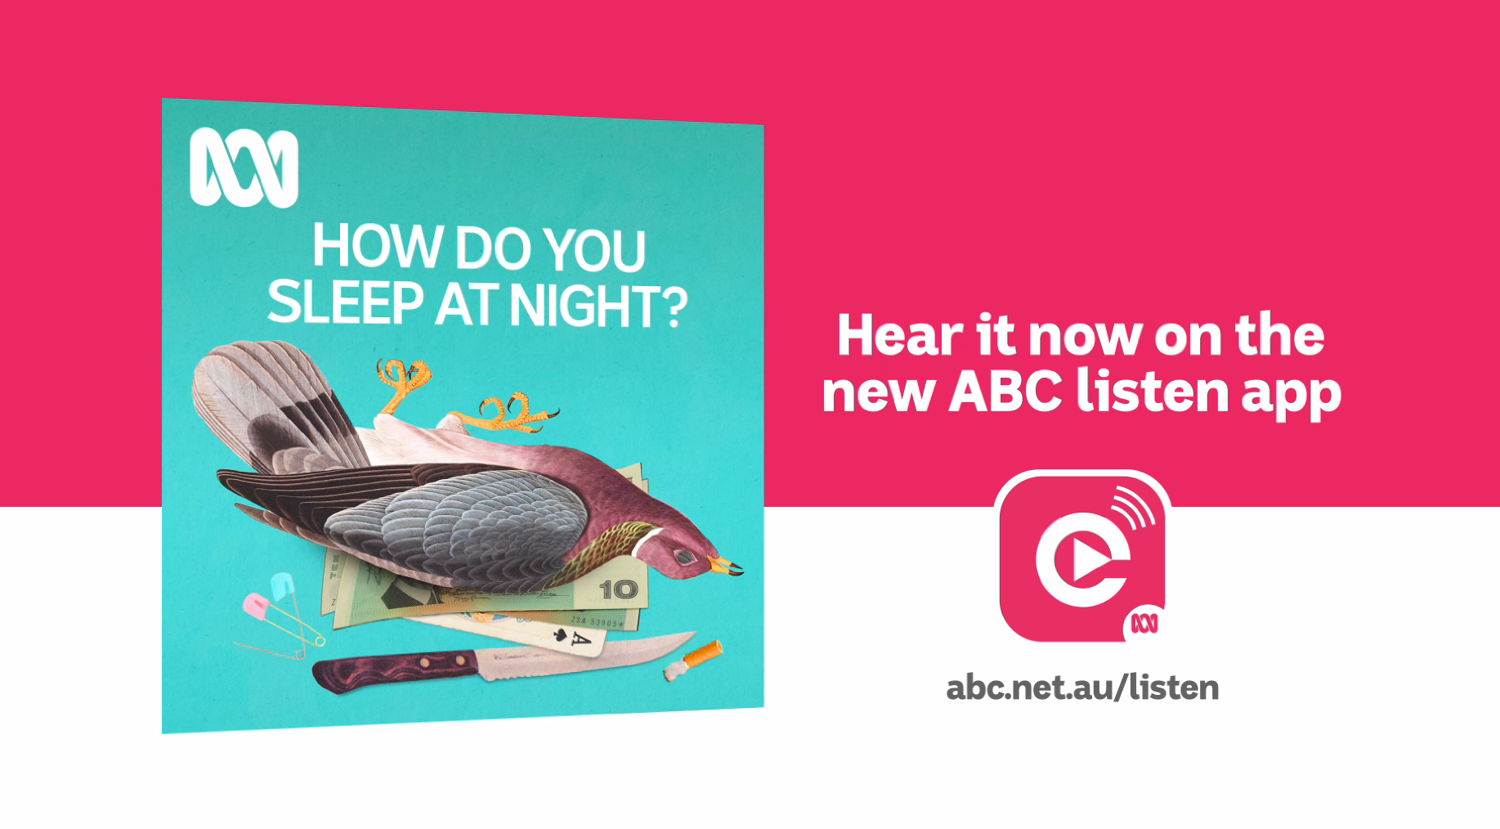 Hear it on the ABC listen app